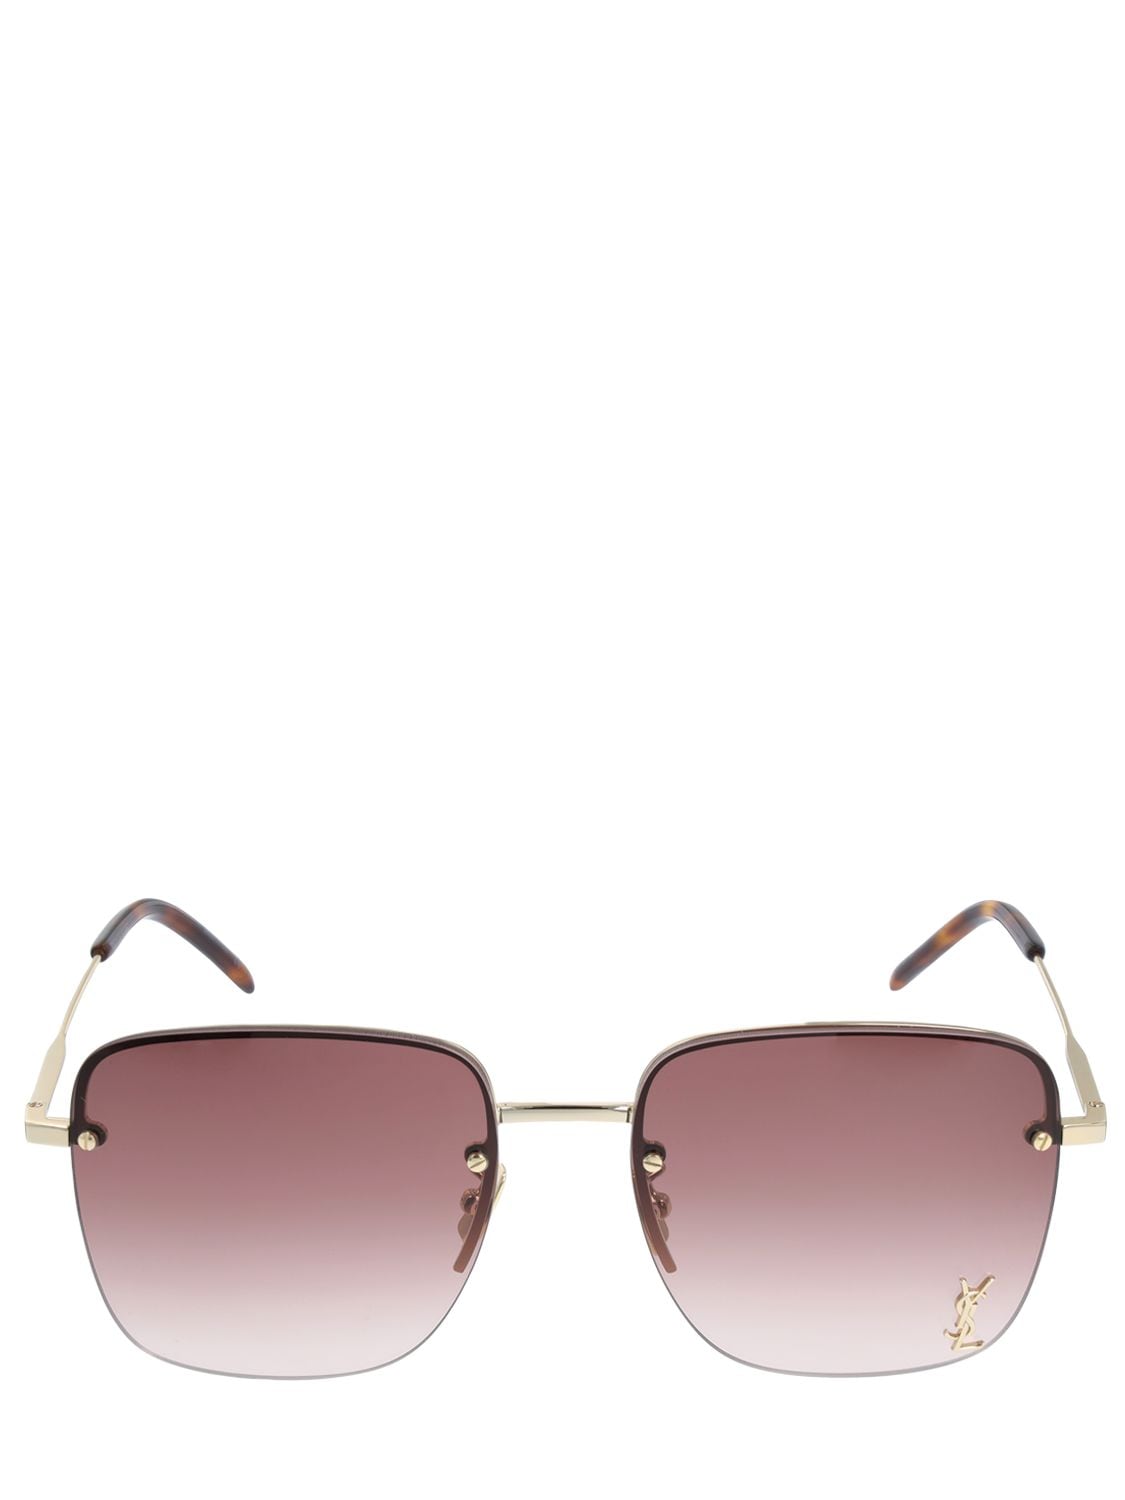 SAINT LAURENT Ysl Sl 312 M Sunglasses for Women